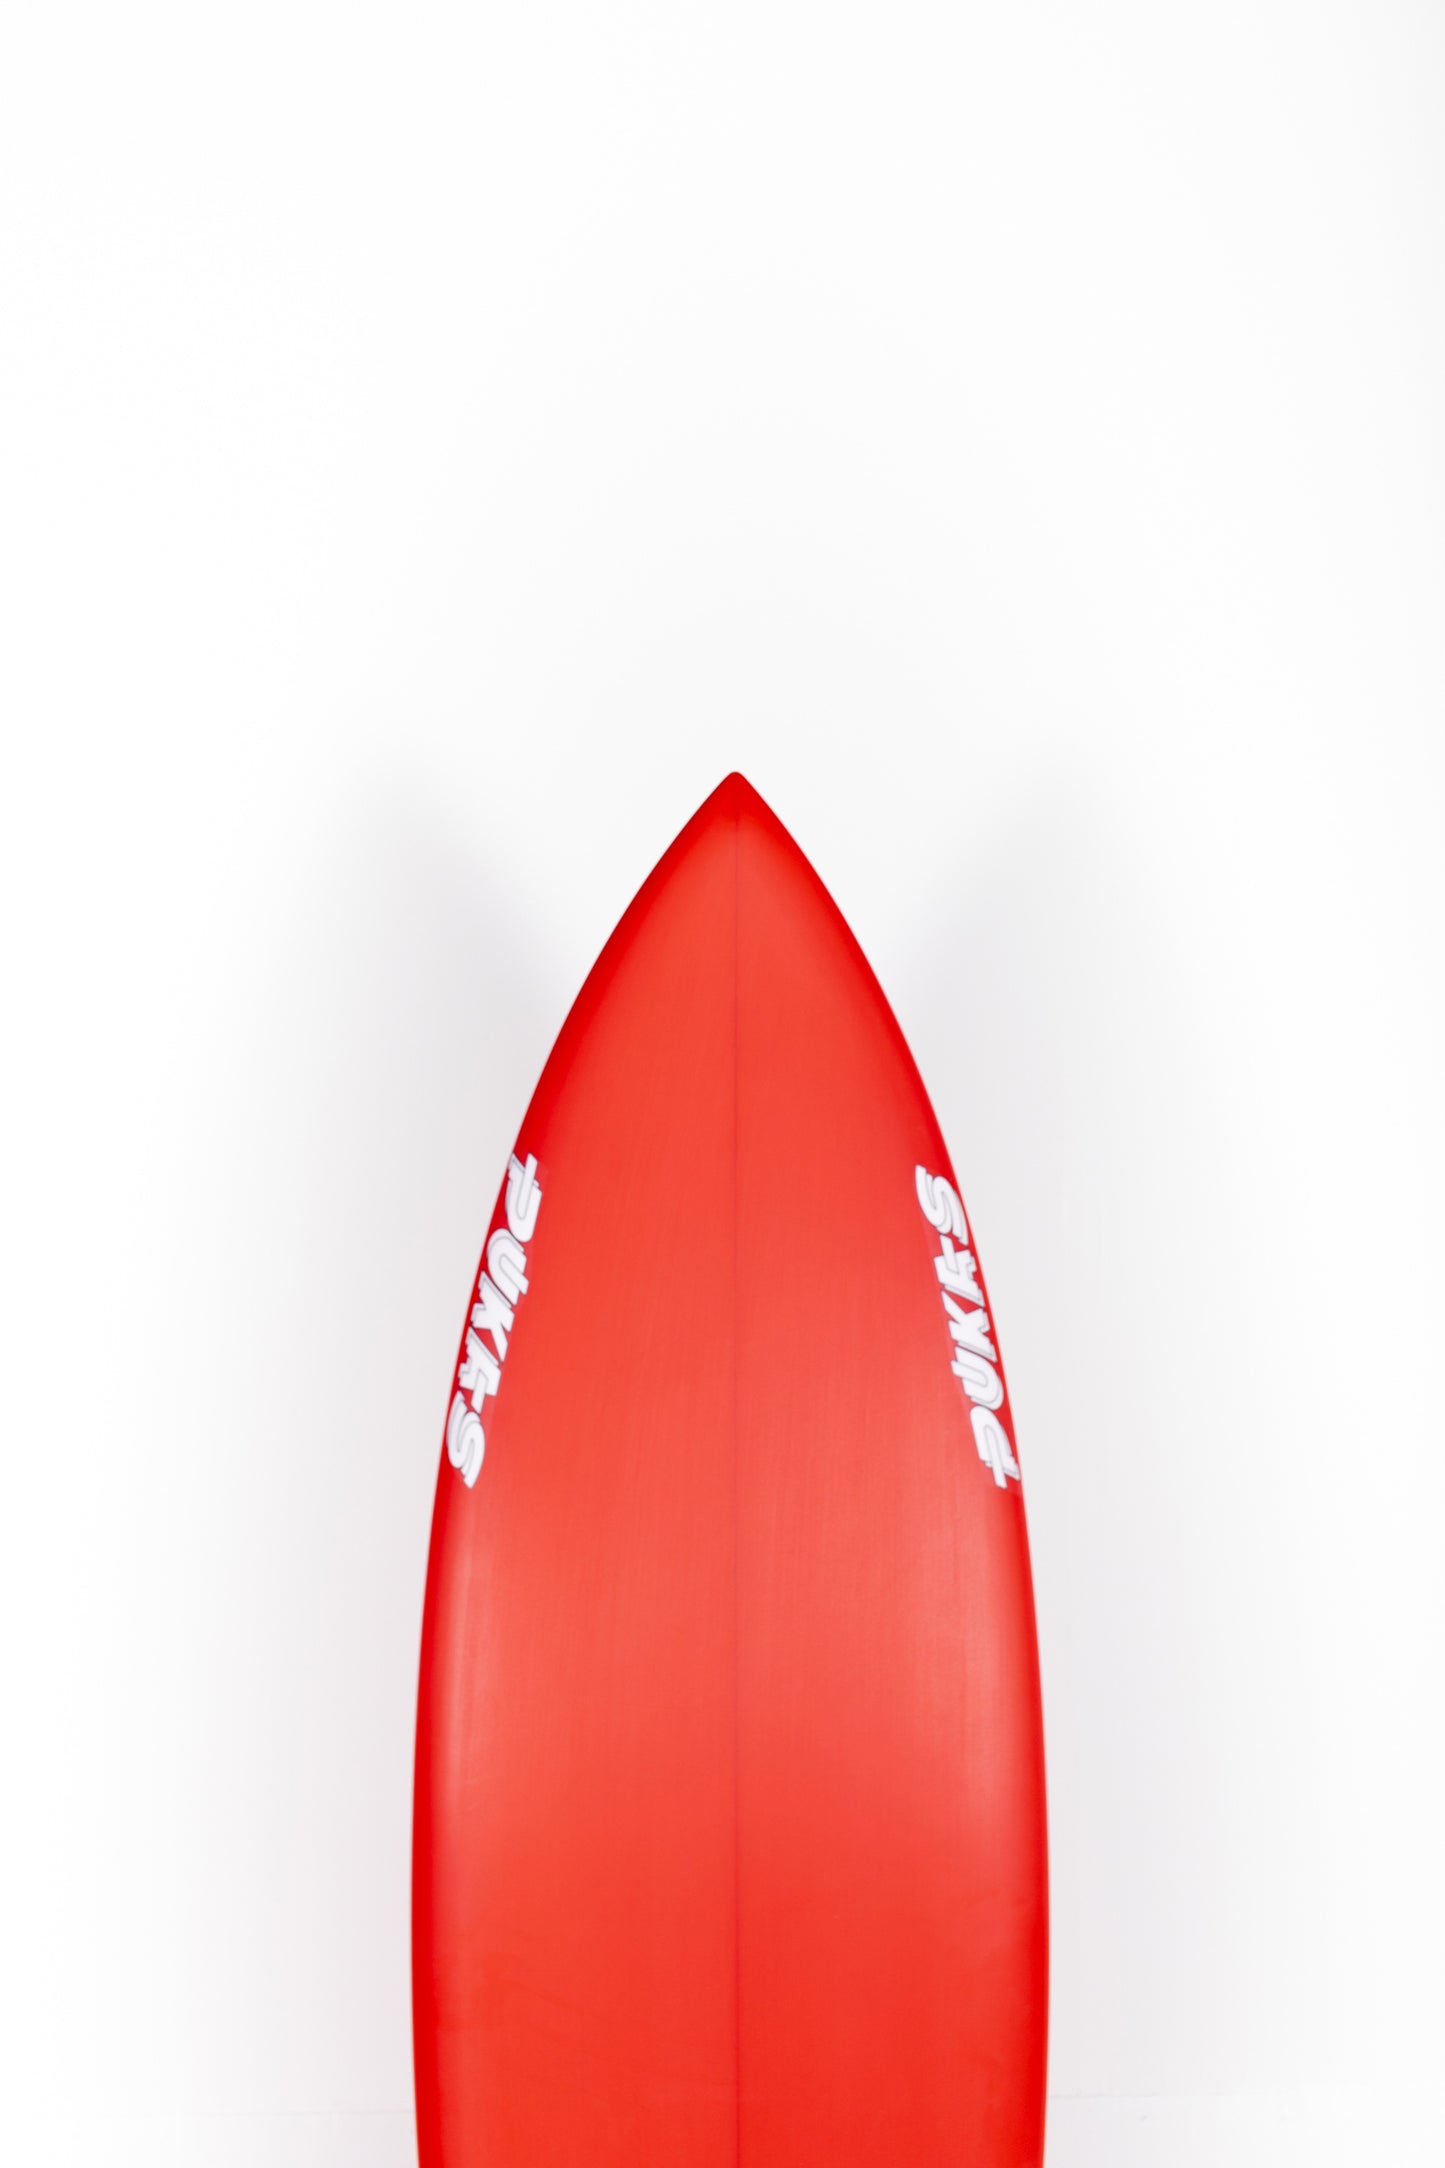 
                  
                    Pukas Surf Shop - Pukas Surfboard - PEGASO by Chris Christenson - 5´8” x 19 1/4 x 2 1/2 - 32,01L - PC00509
                  
                